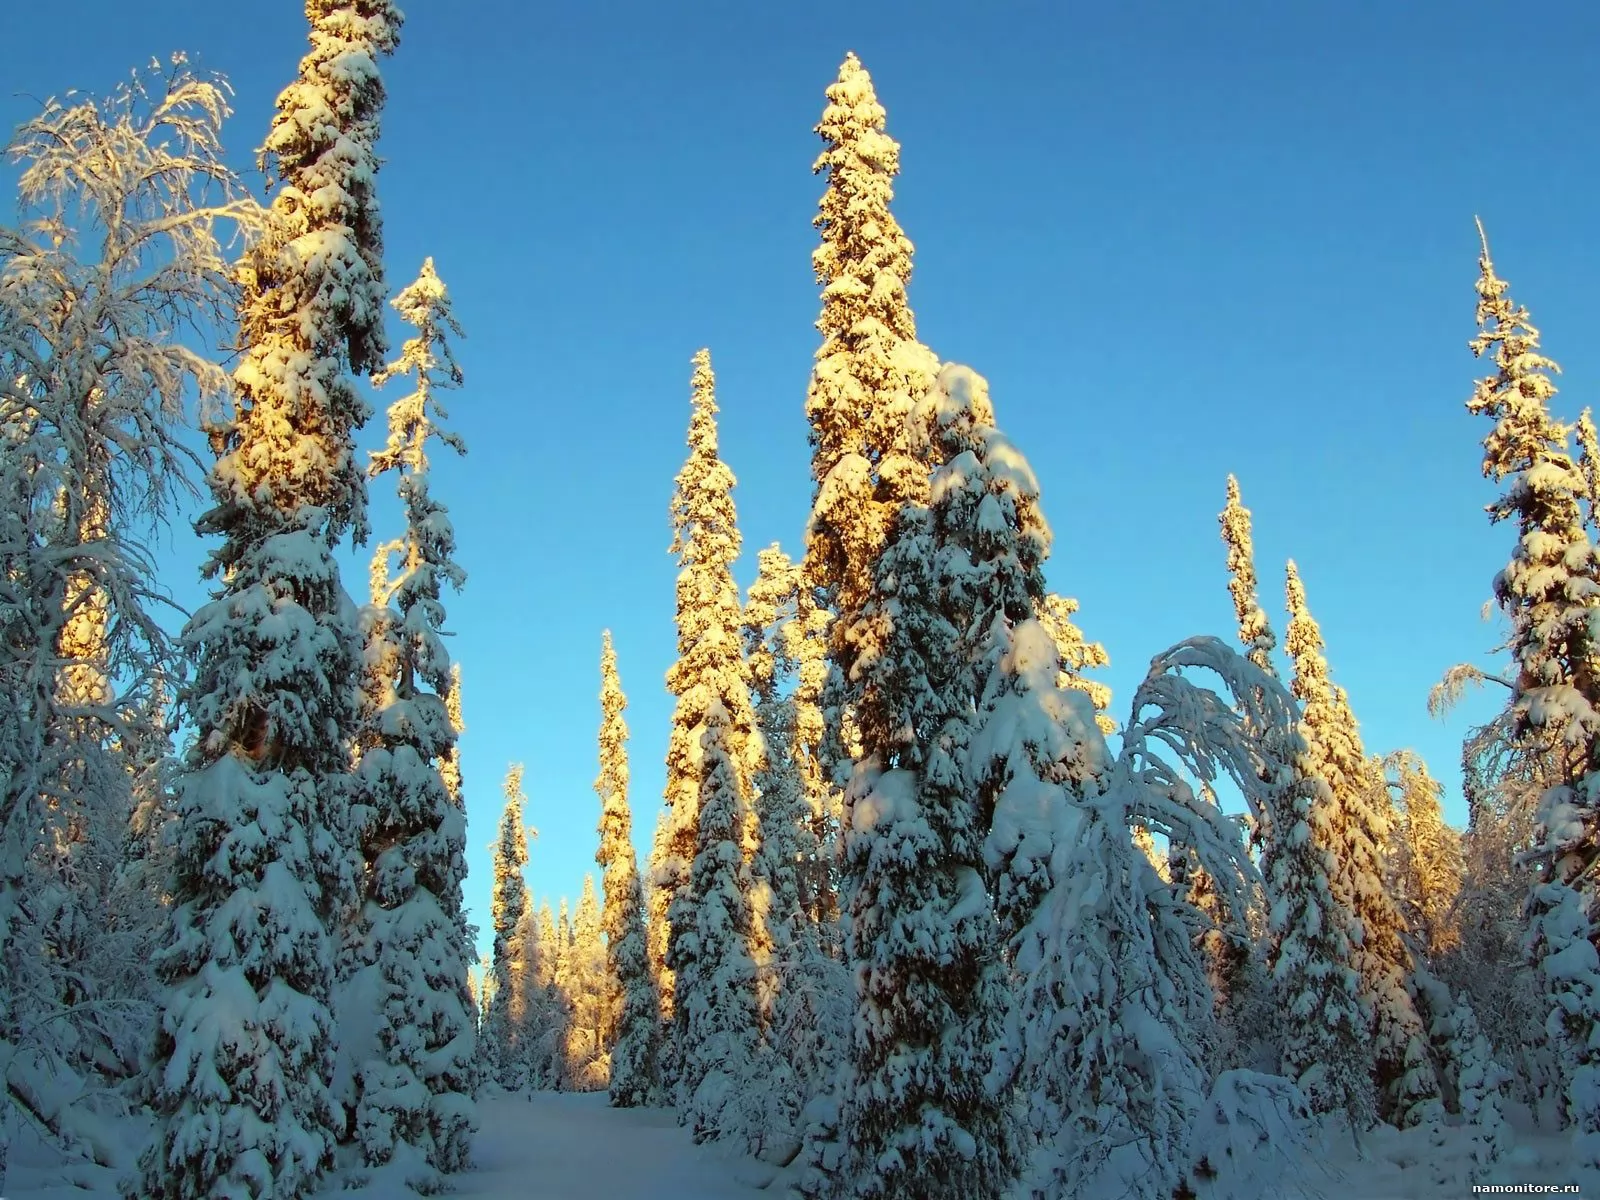 Фотография макушки деревьев зимой